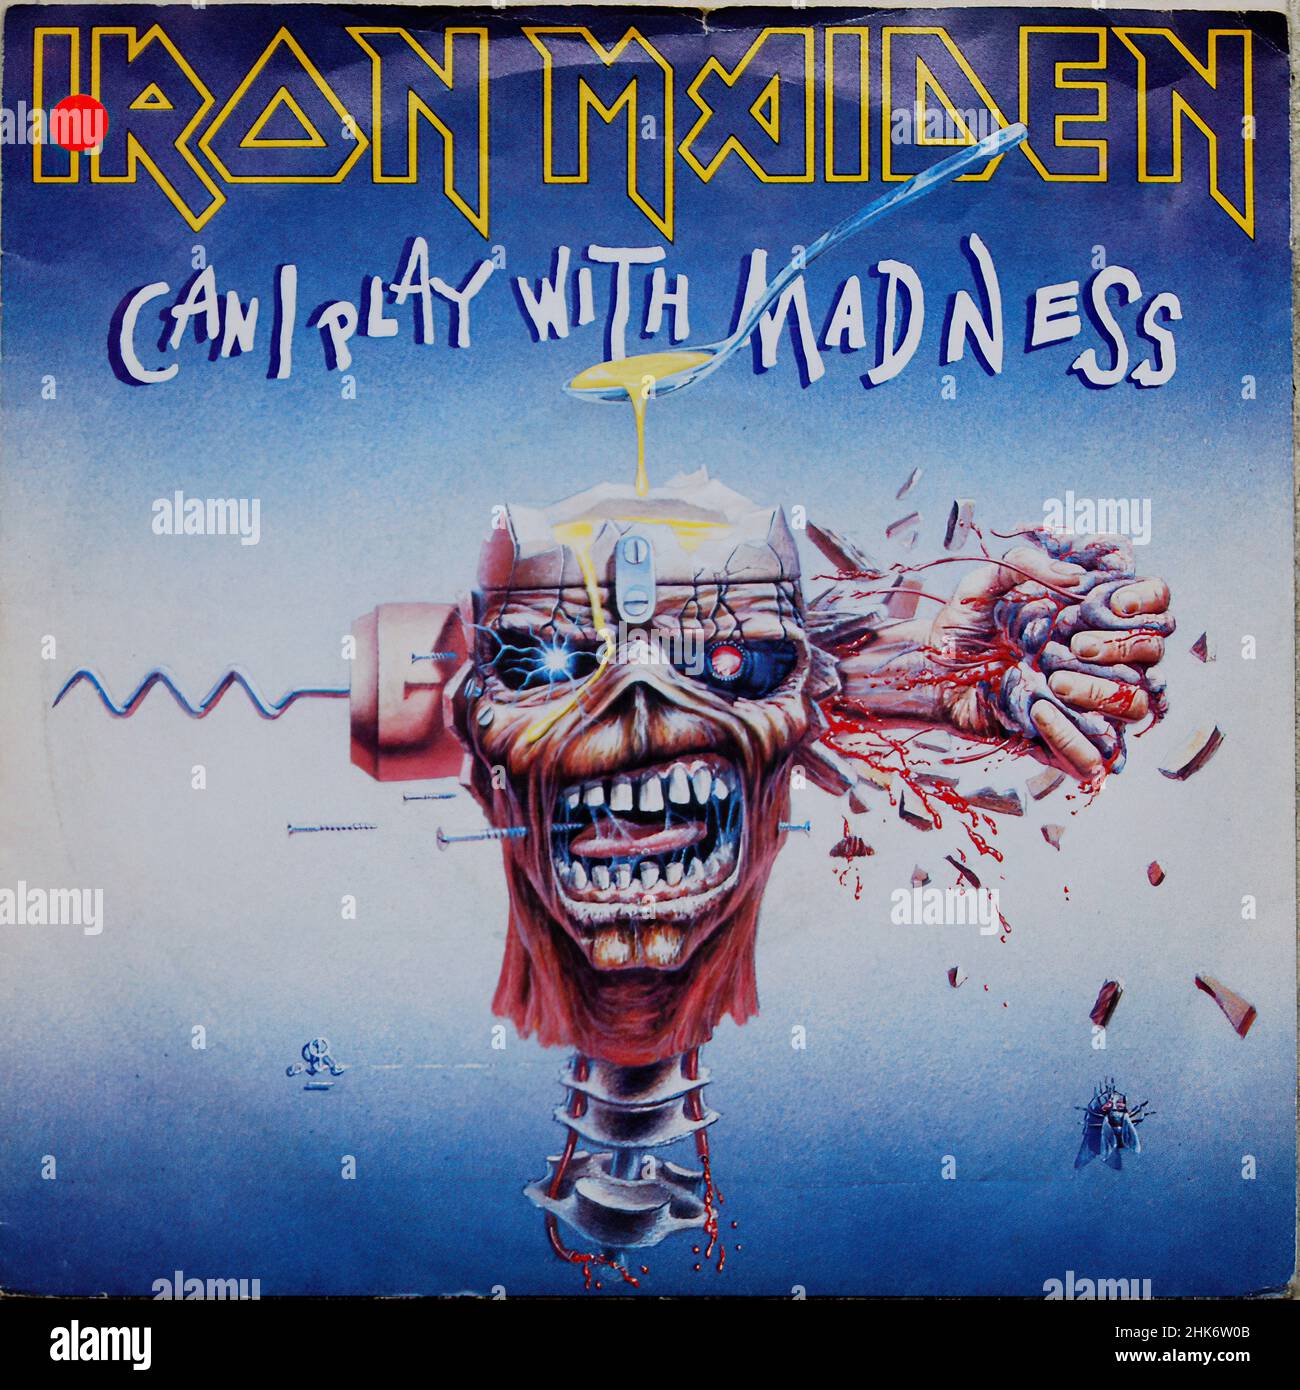 Vintage vinilo discográfico - Iron Maiden - Can I Play with Madness (1988)  00001 Fotografía de stock - Alamy